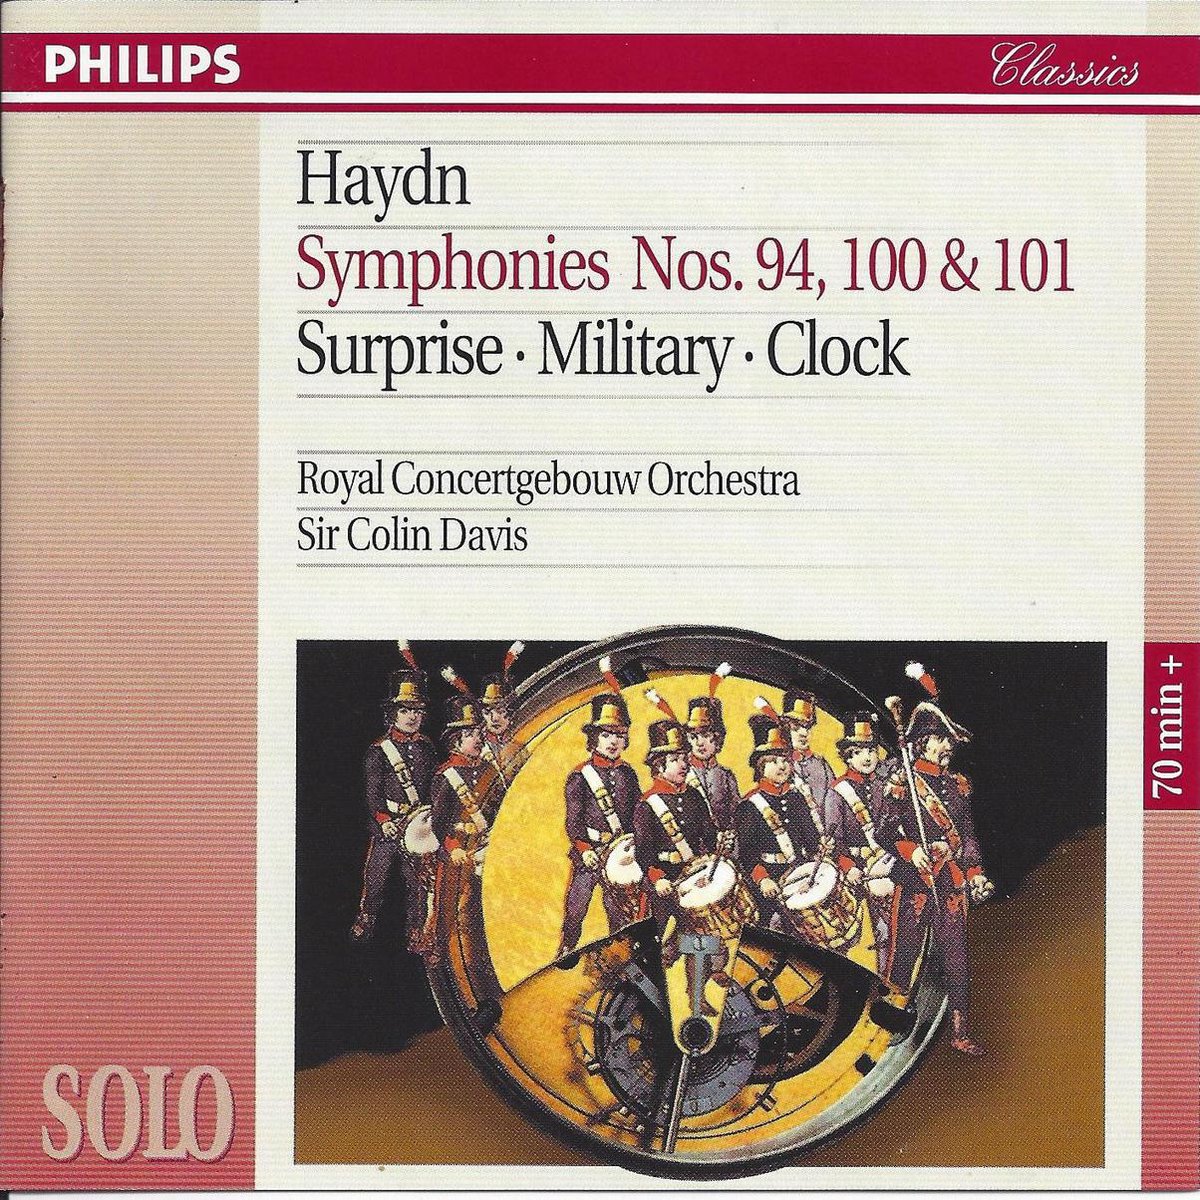 Haydn - Symphonies Nos. 94, 100 & 101 - Royal Concertgebouw Orchestra